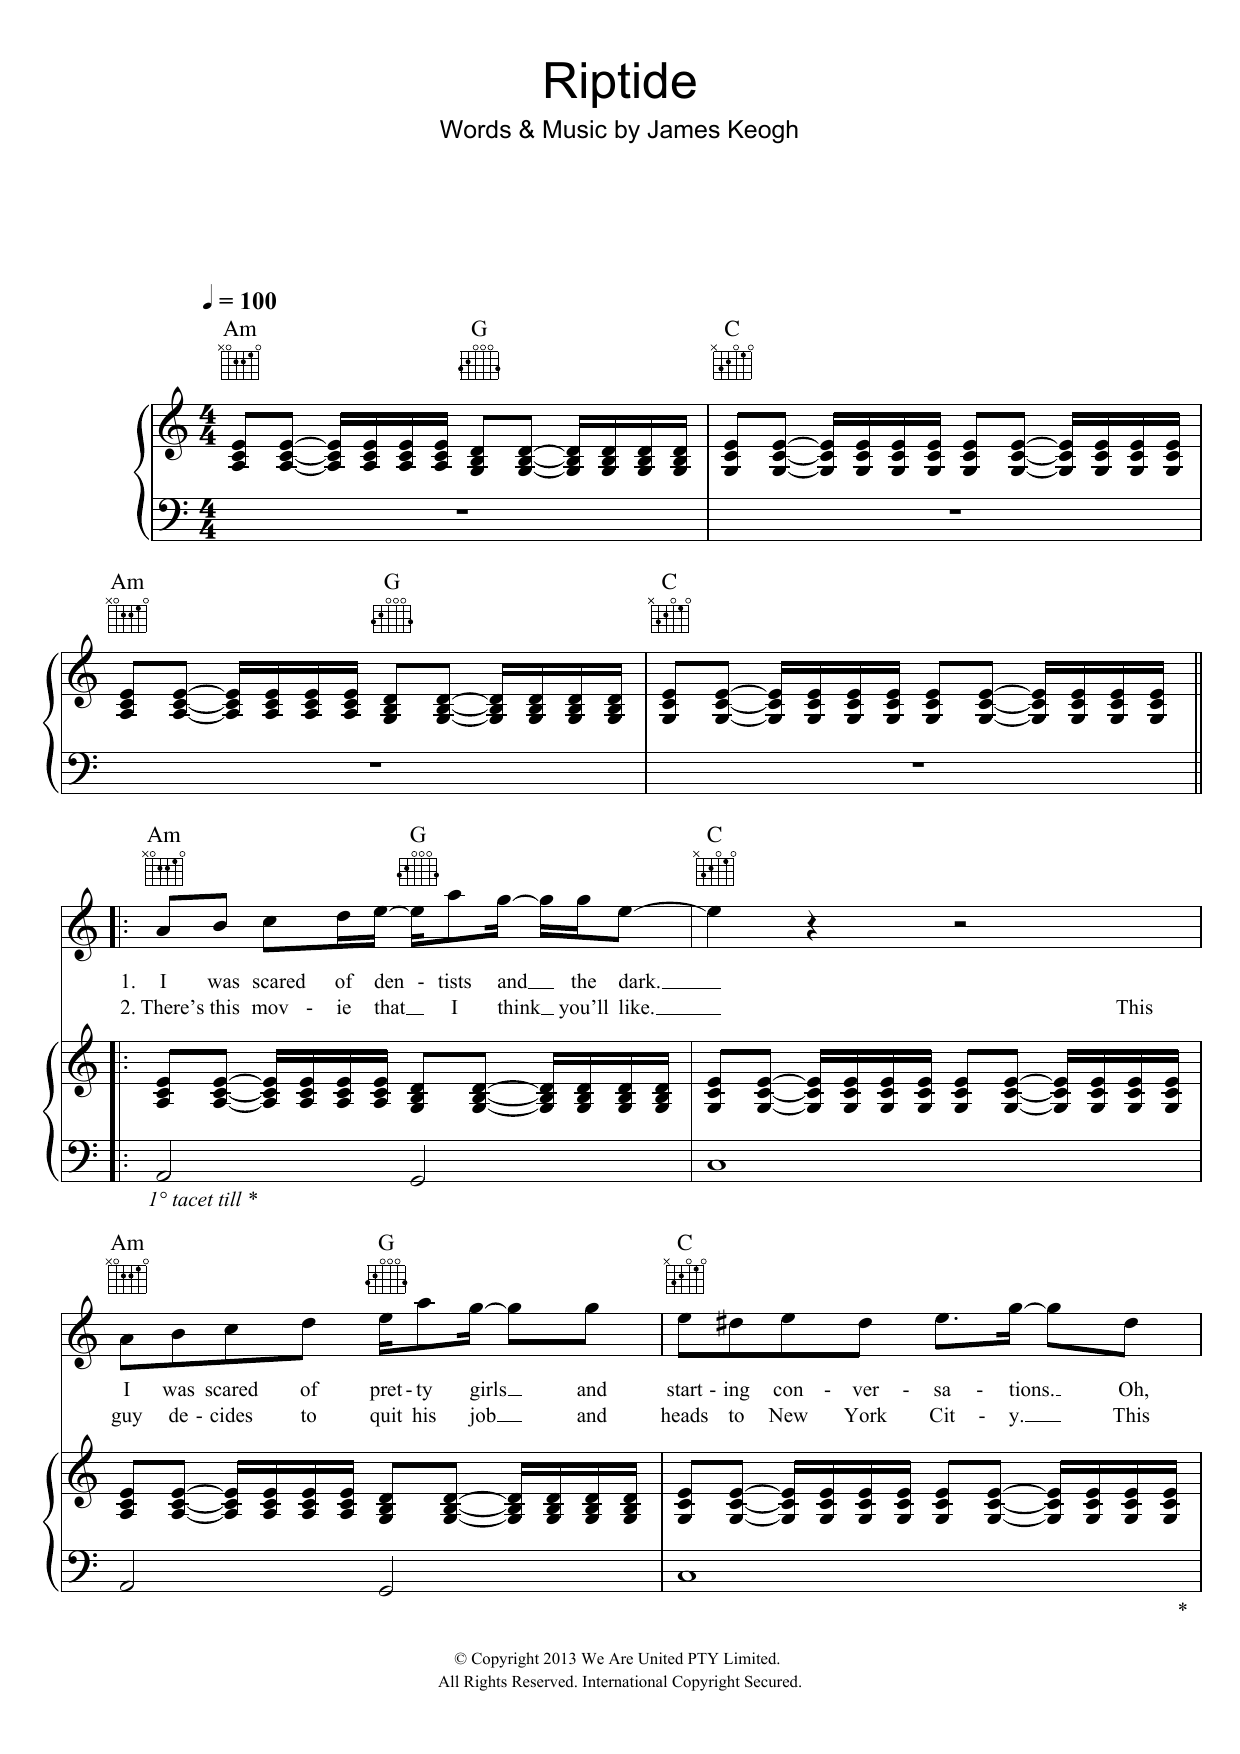 Vance Joy Riptide Sheet Music Notes & Chords for Guitar Tab (Single Guitar) - Download or Print PDF